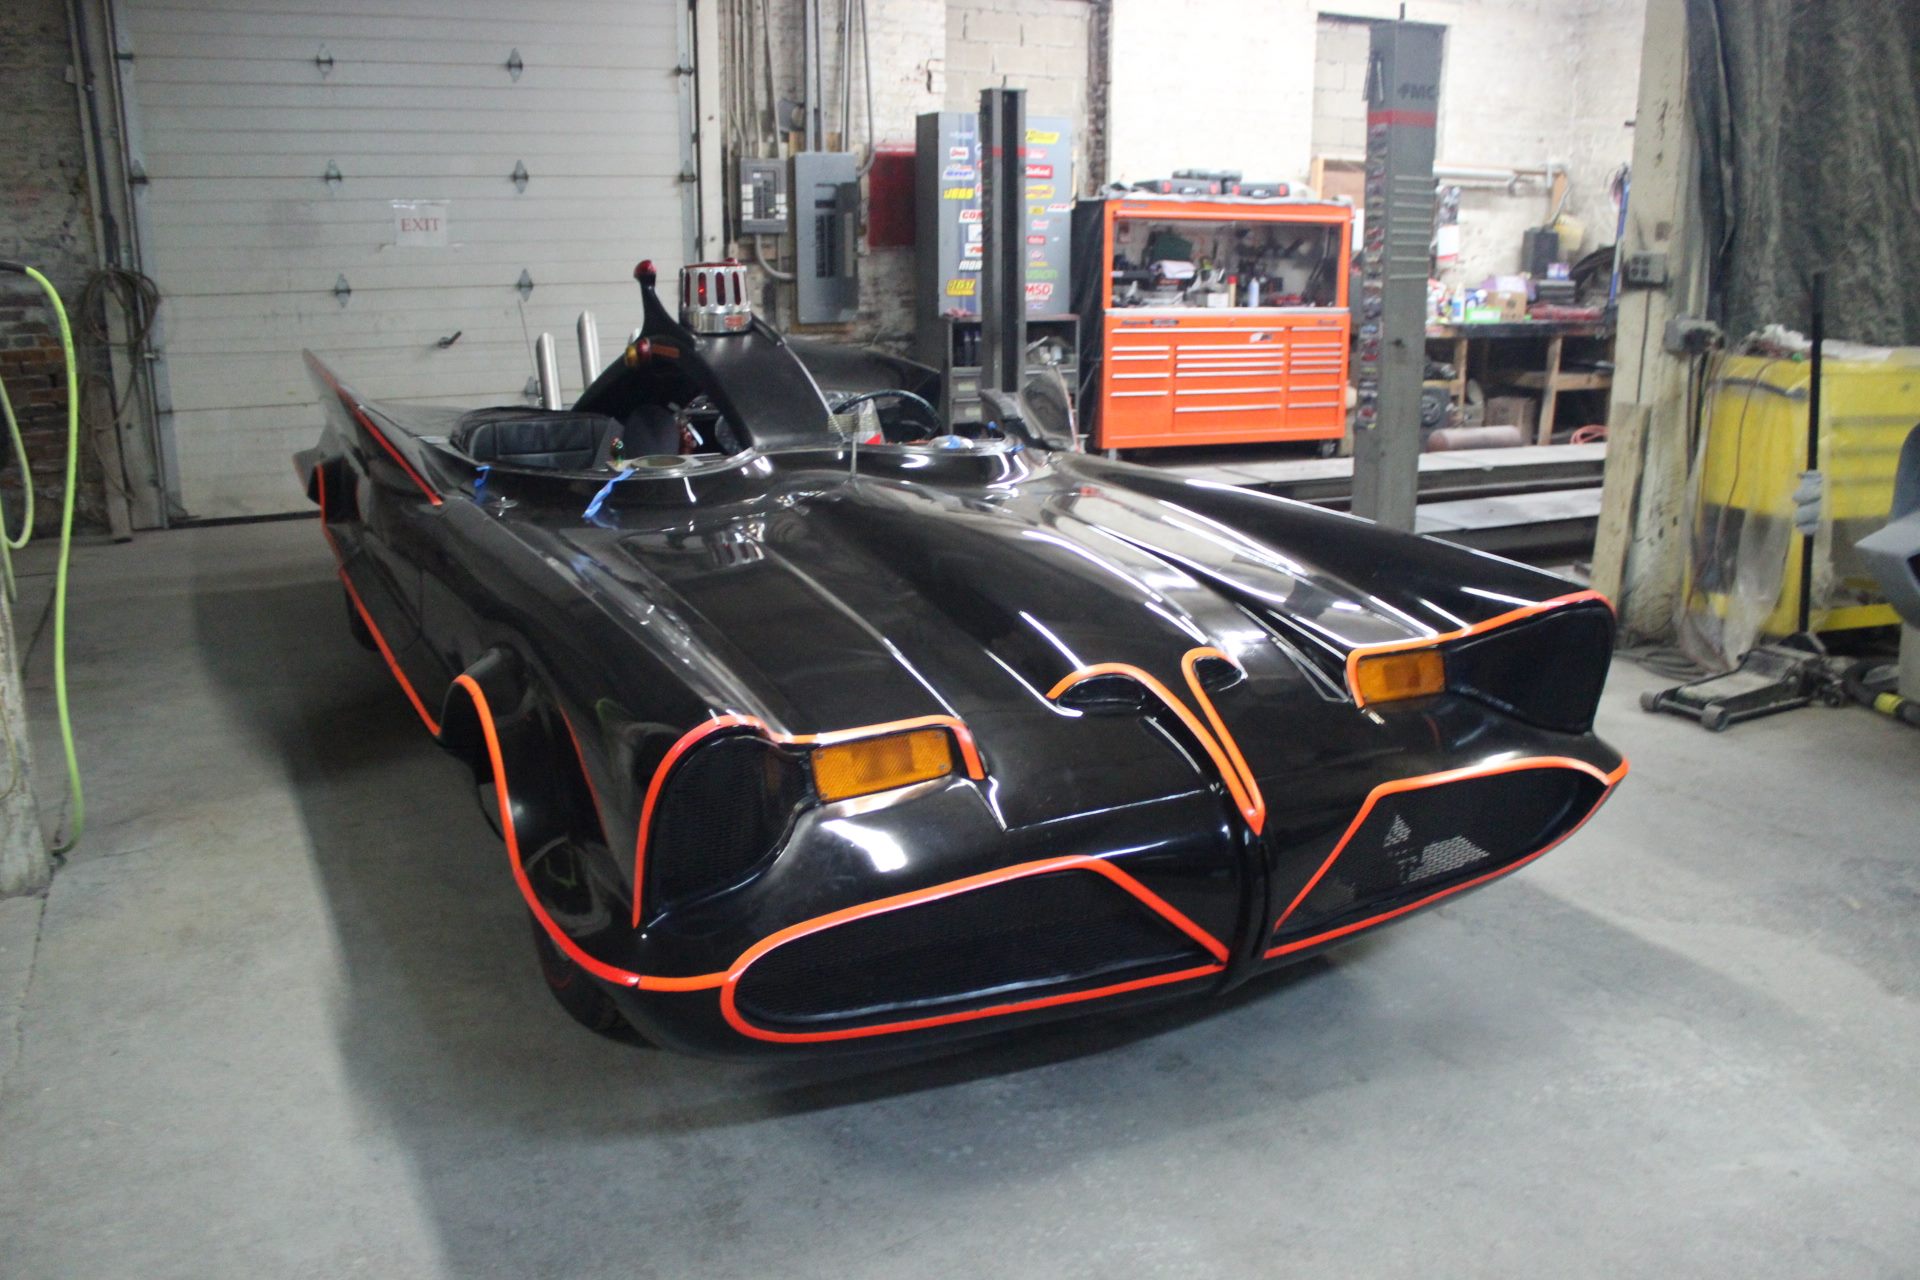 We restored the Barris-built #4 dragster Batmobile!